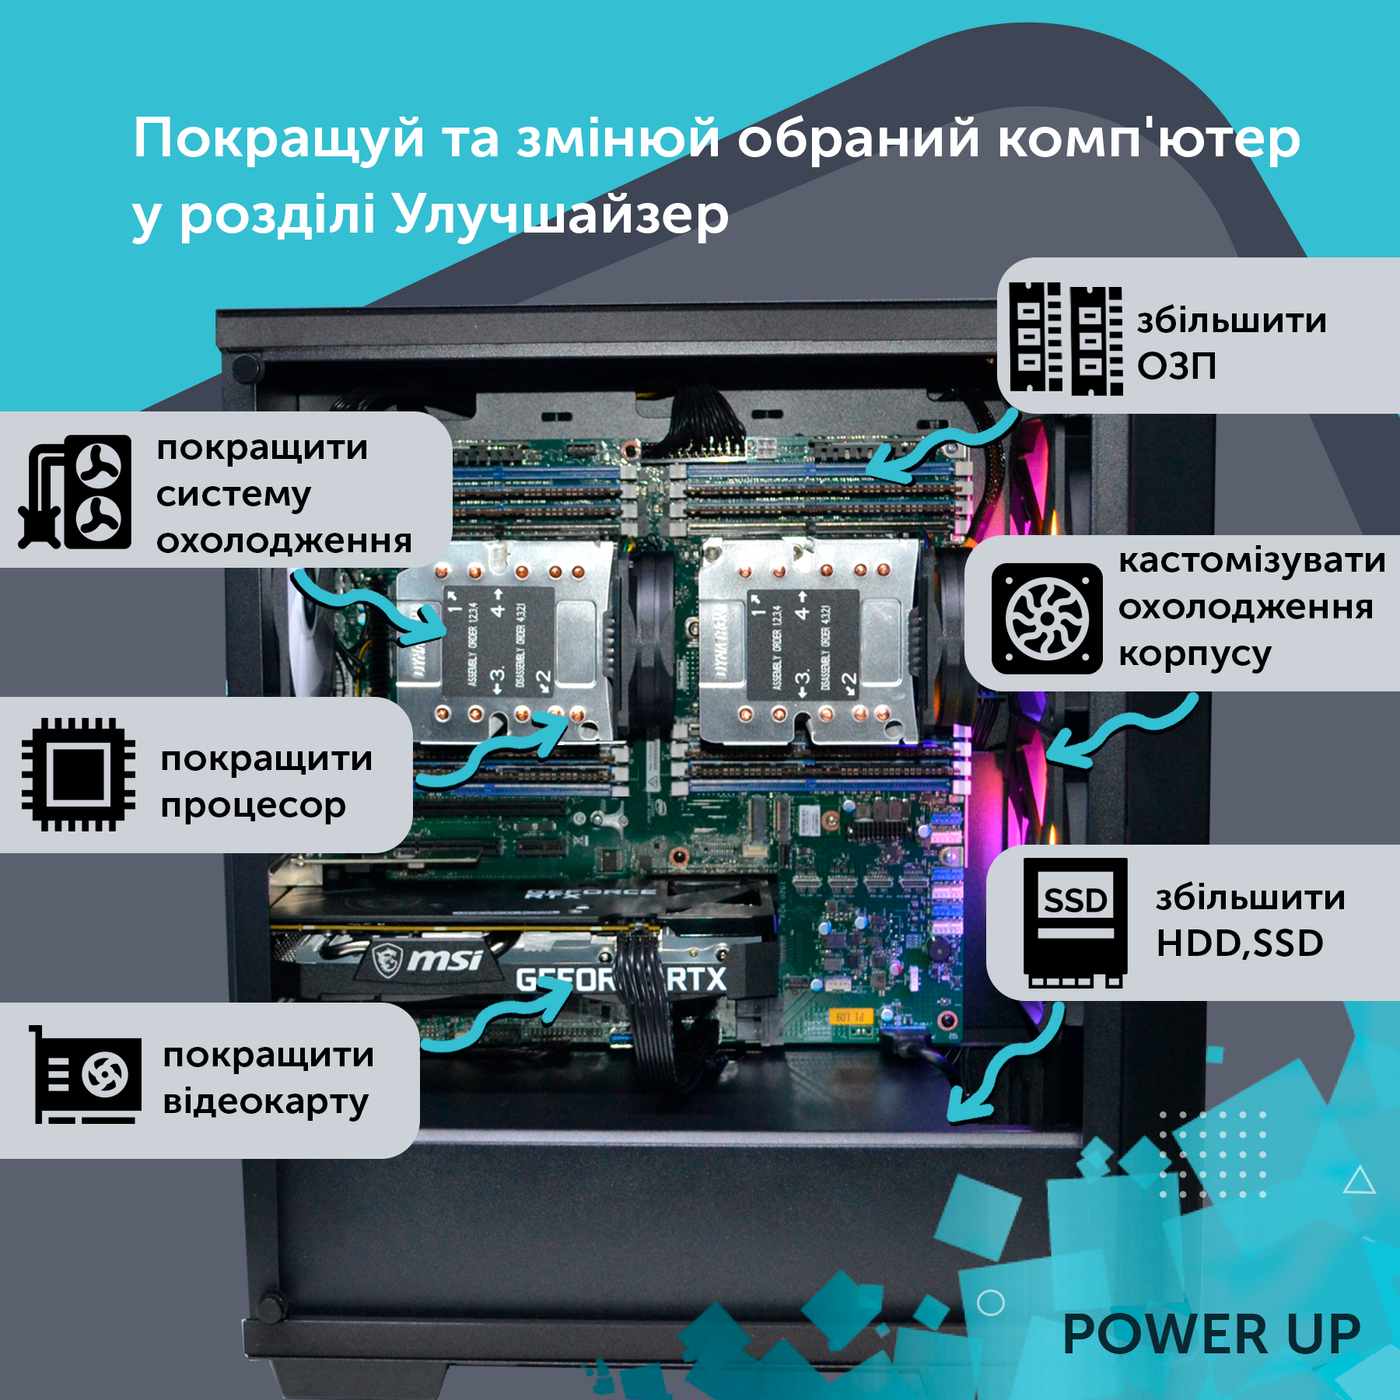 Рабочая станция PowerUp #131 Xeon E5 2690 v3/64 GB/SSD 512GB/NVIDIA Quadro RTX A4000 16GB